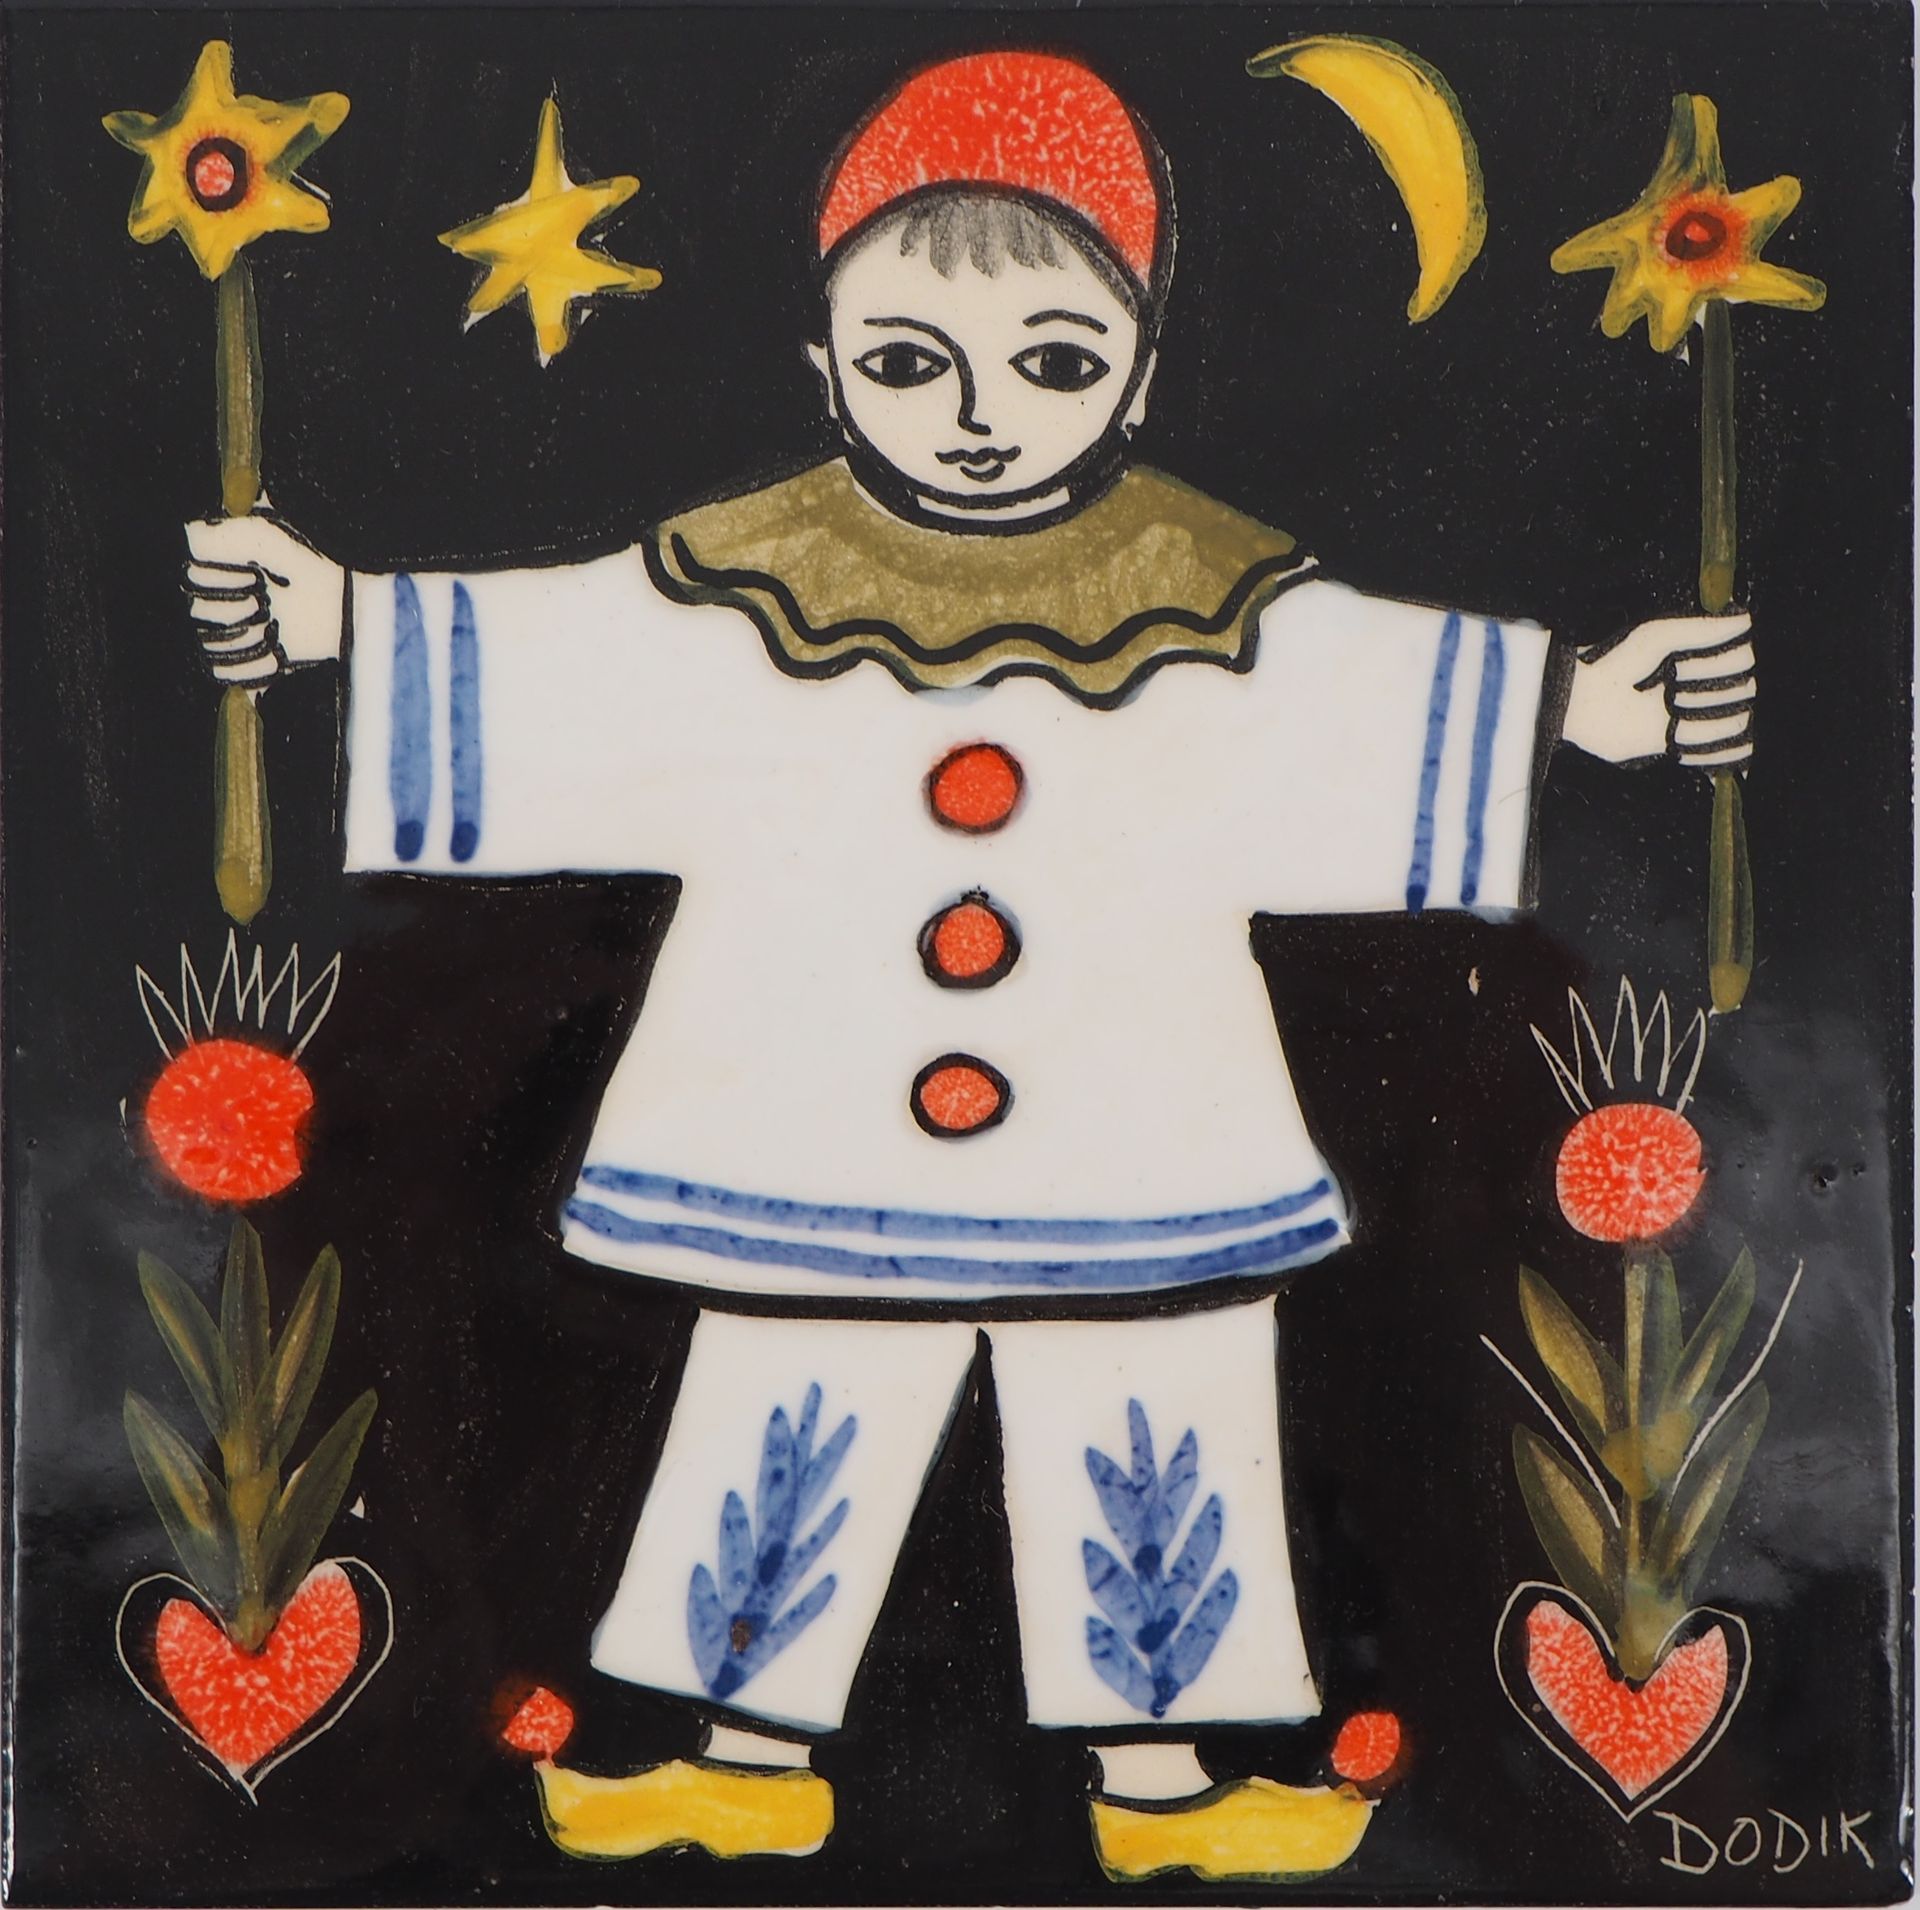 DODIK DODIK (Dodik Jégou dit, 1934-)

Pierrot la Lune

Céramique originale (Sain&hellip;